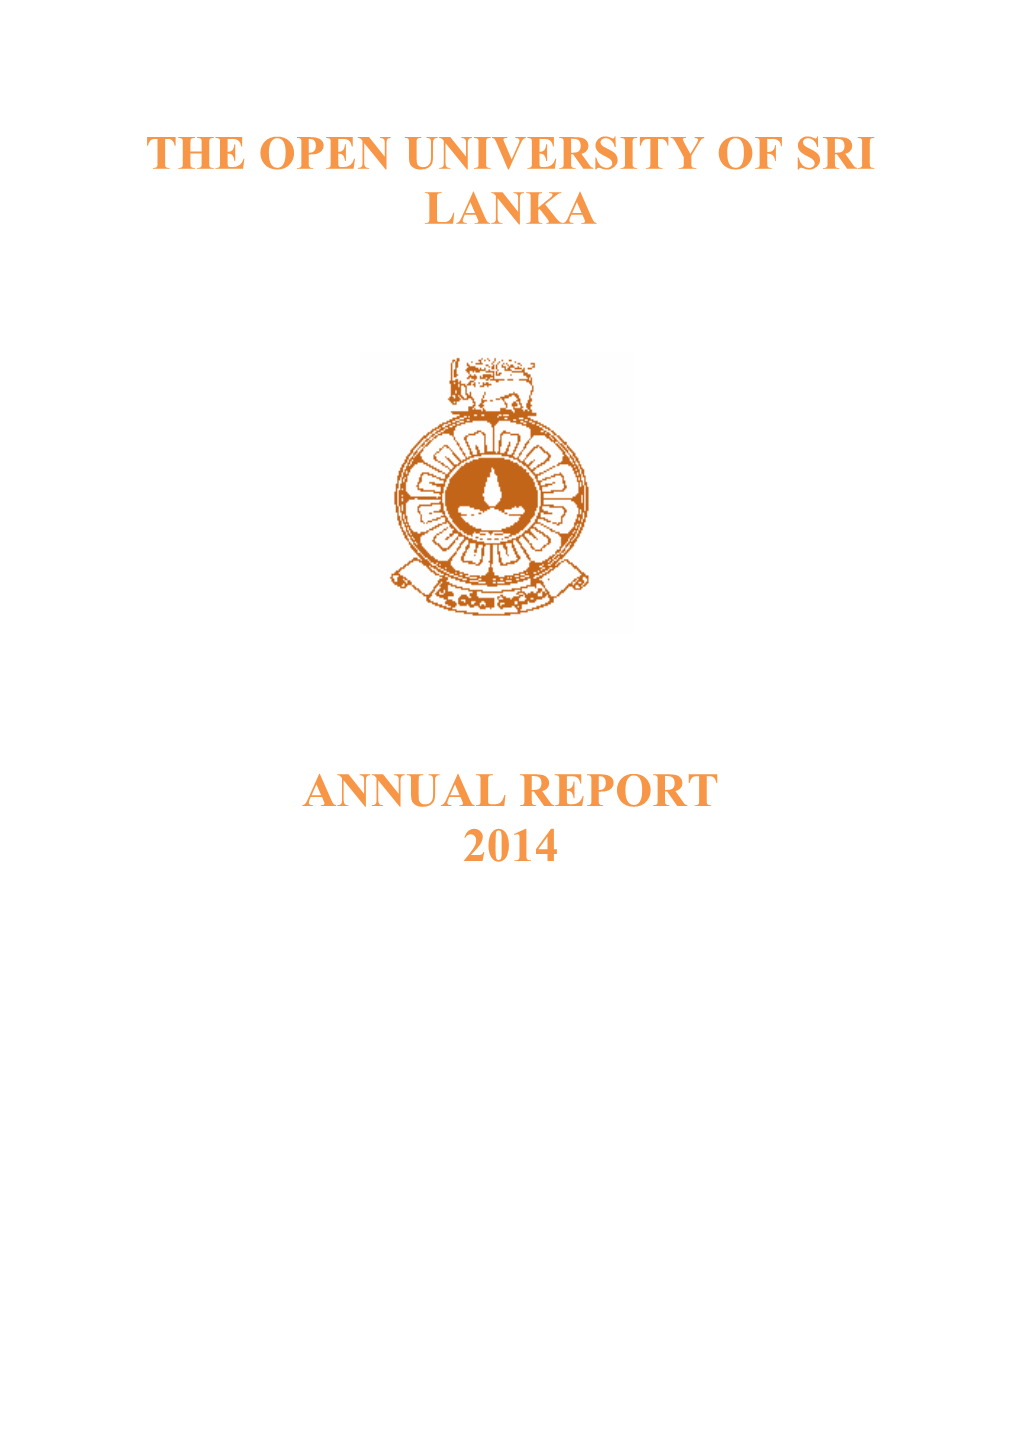 The Open University of Sri Lanka Annual Report 2014